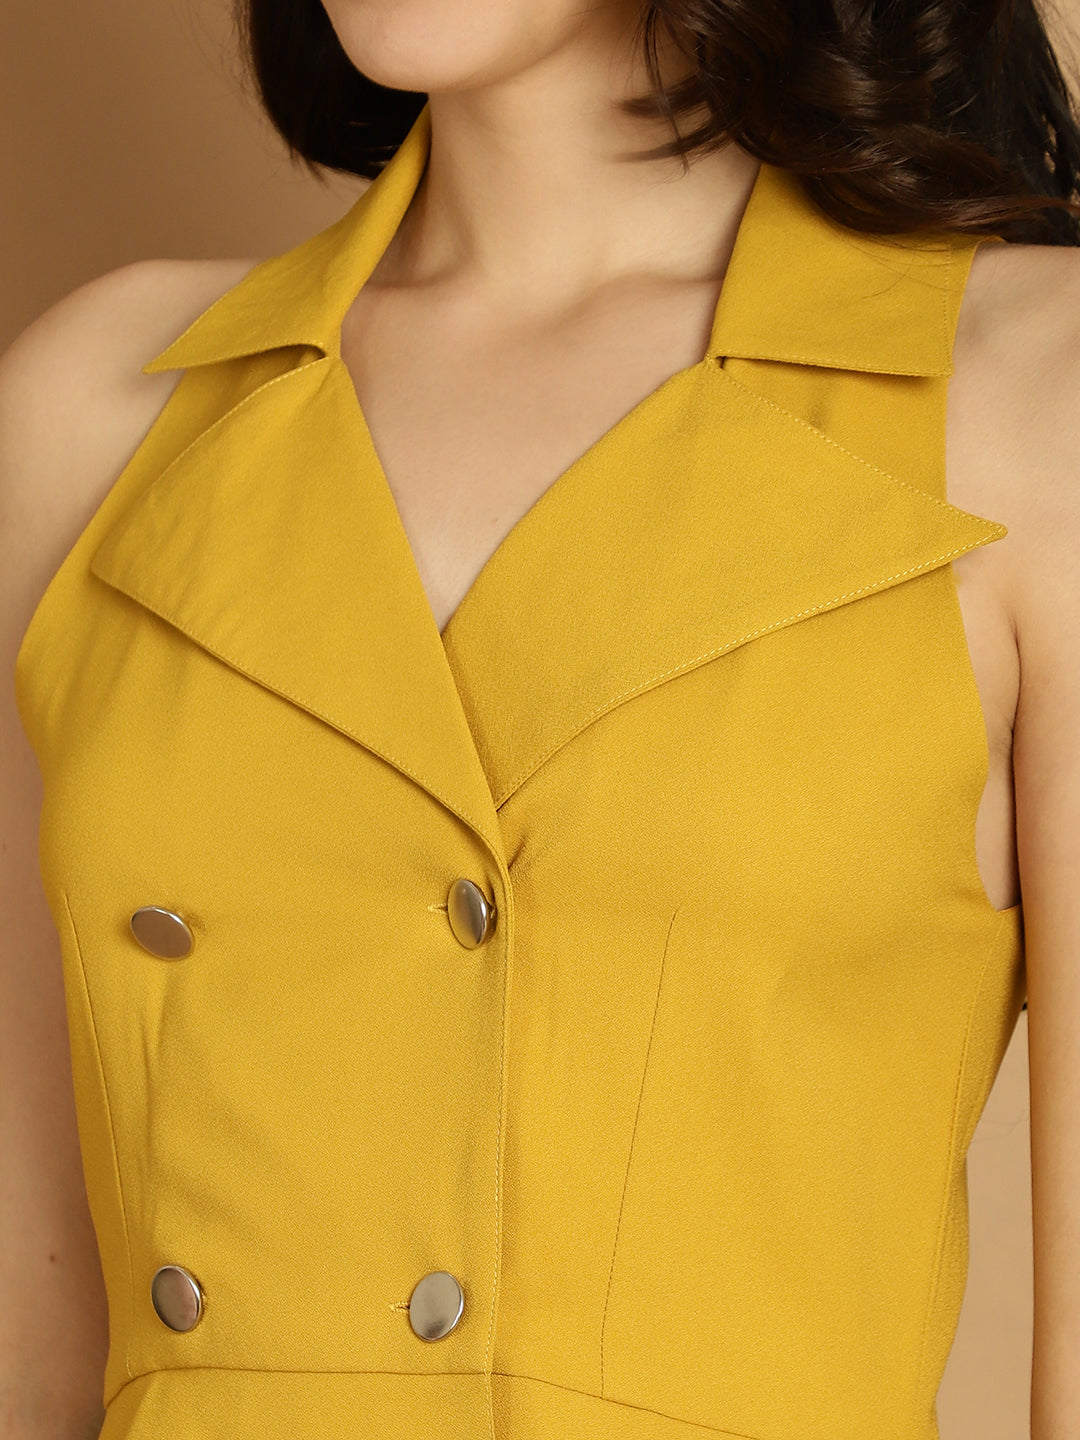 BLANC9 Mustard Yellow Peplum Blazer Top With Trouser -B9ST74Y